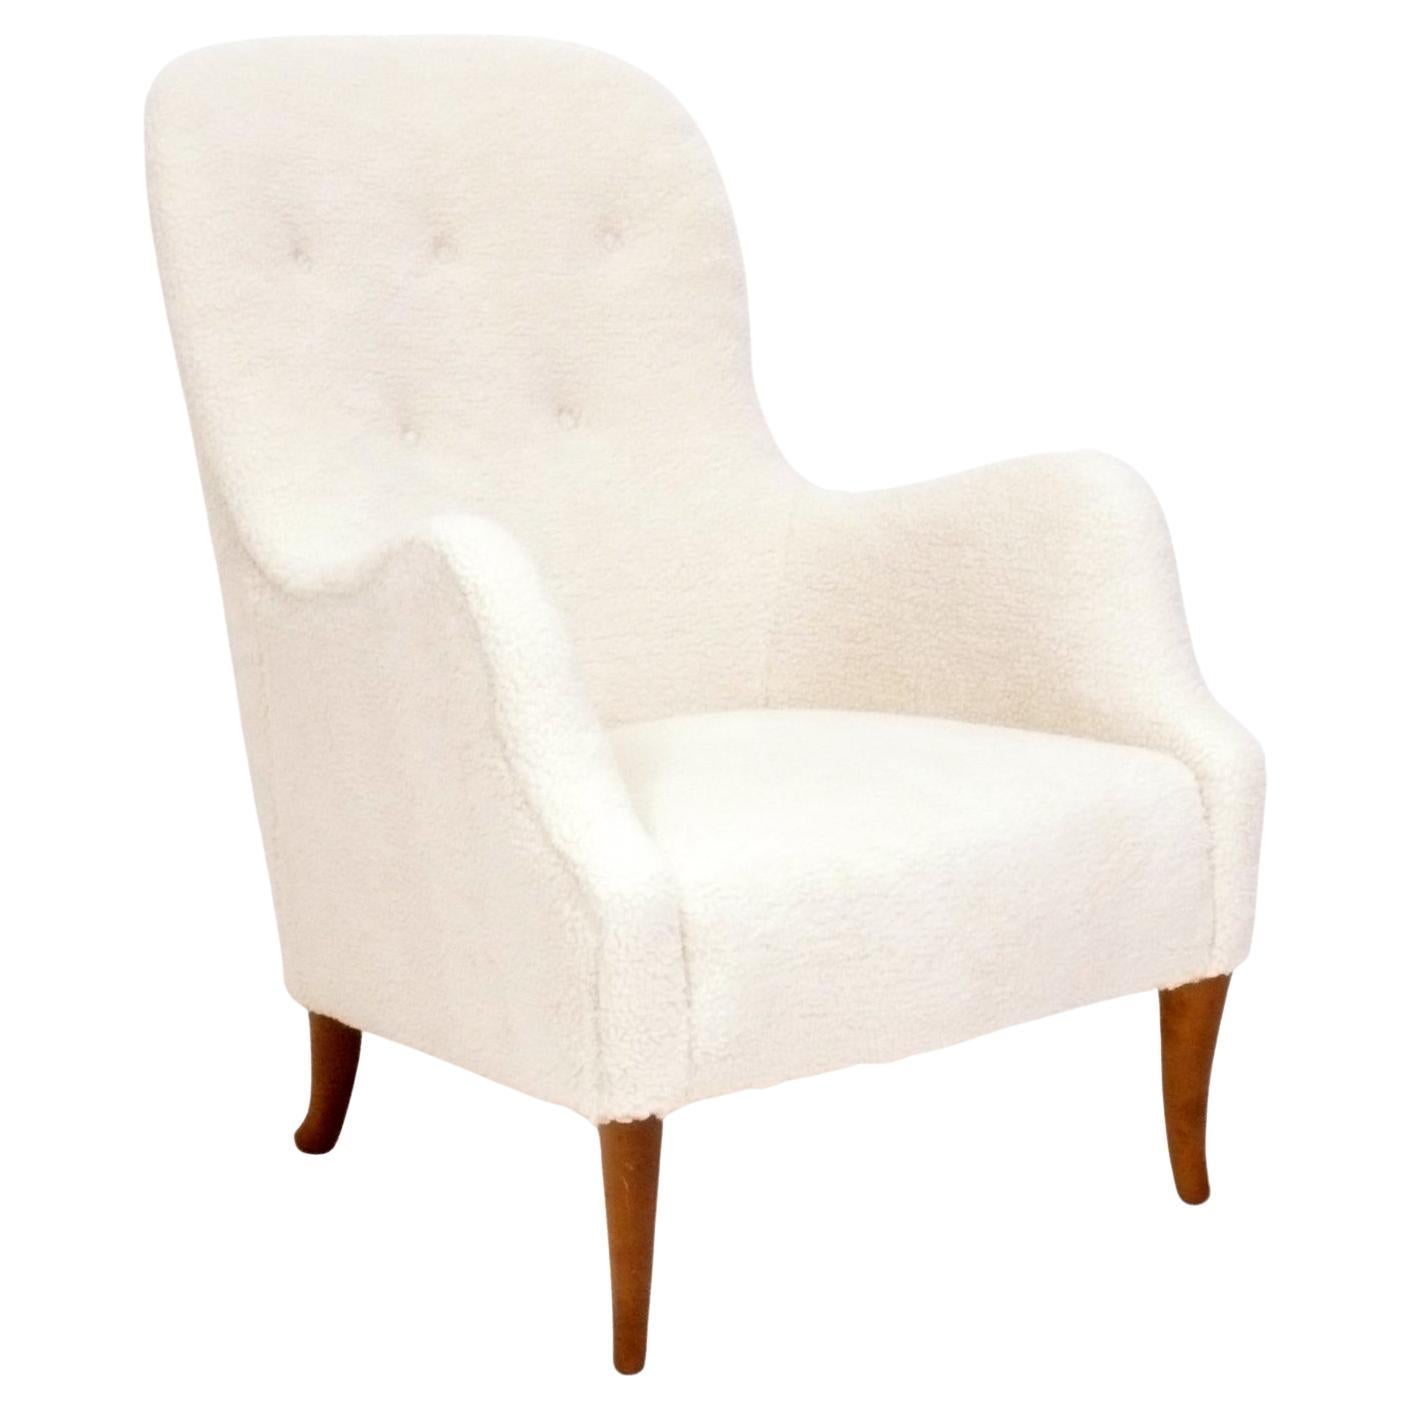 Danish Modern Lounge Chair Upholstered in Faux Sheepskin